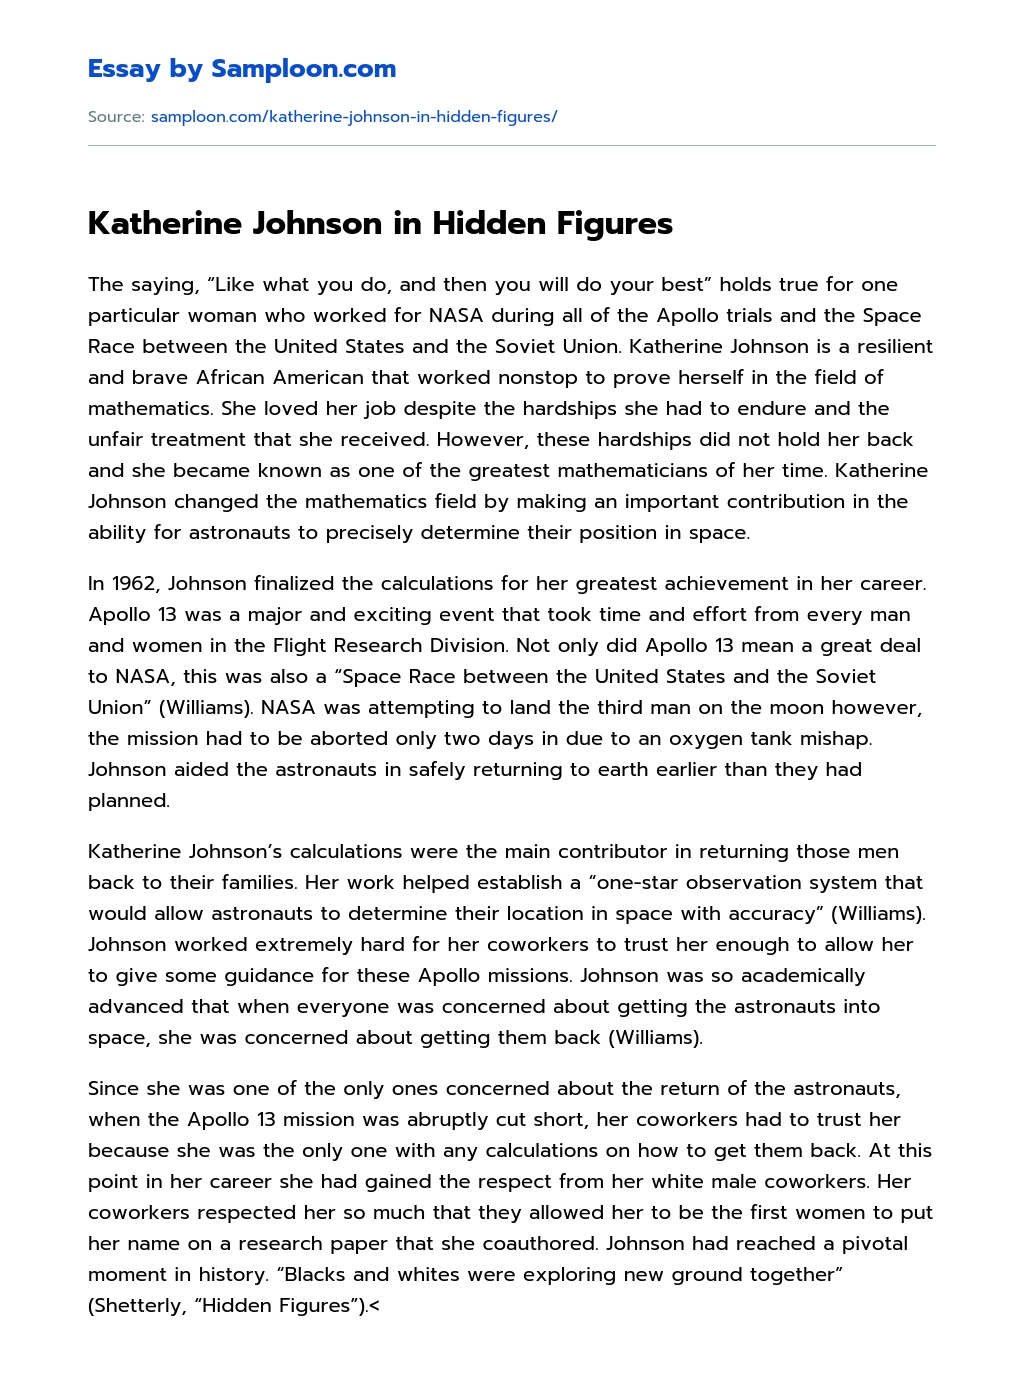 Katherine Johnson in Hidden Figures Character Analysis essay